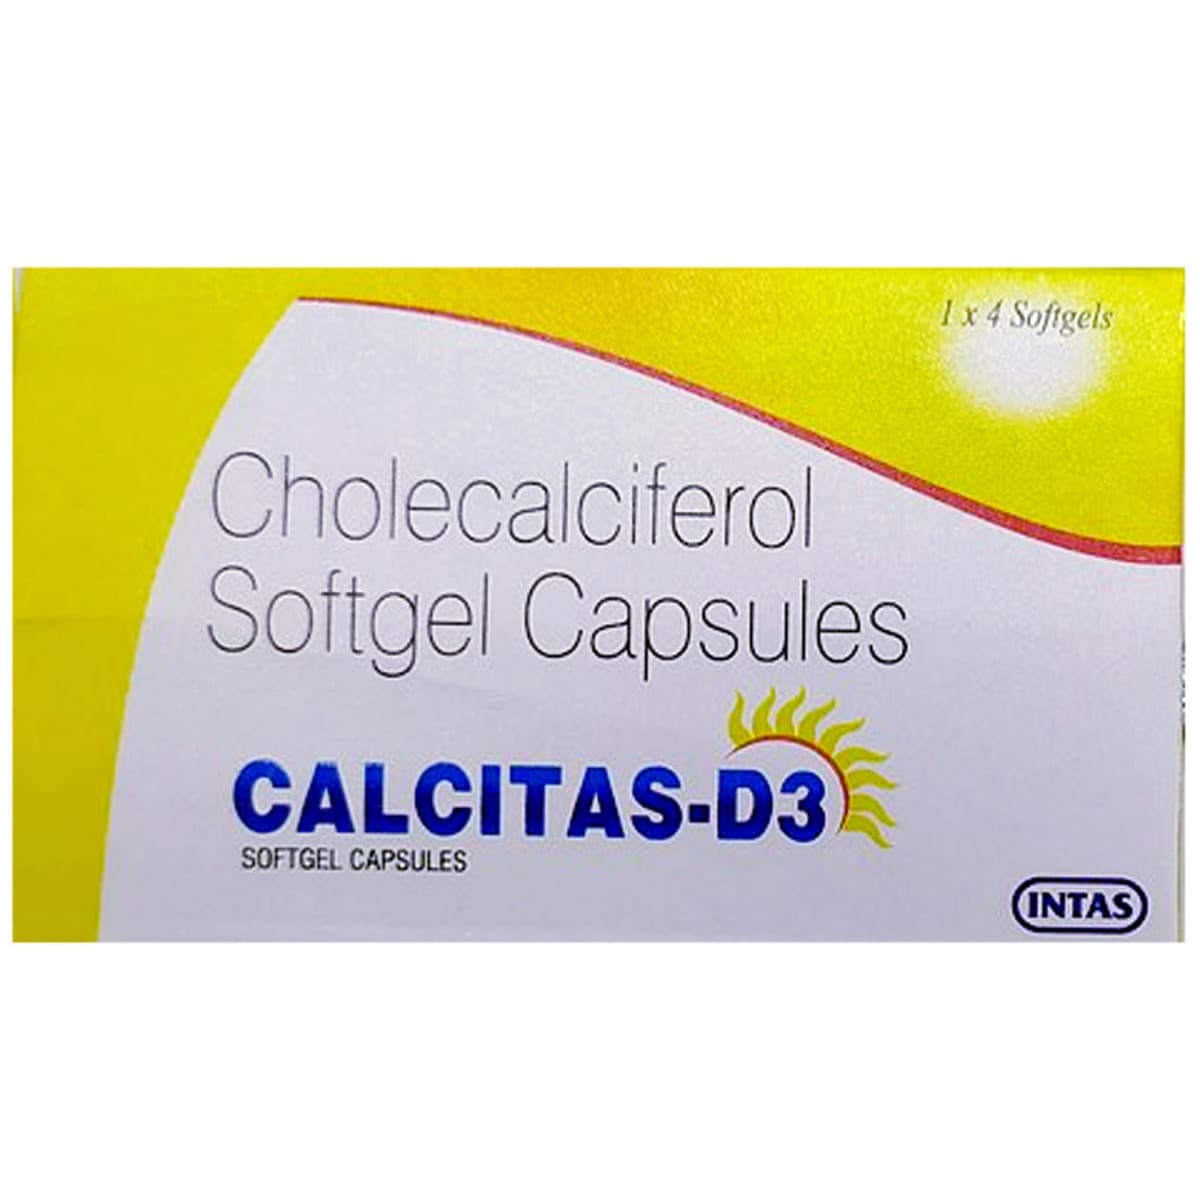 Buy Calcitas-D3 Capsule 4's Online